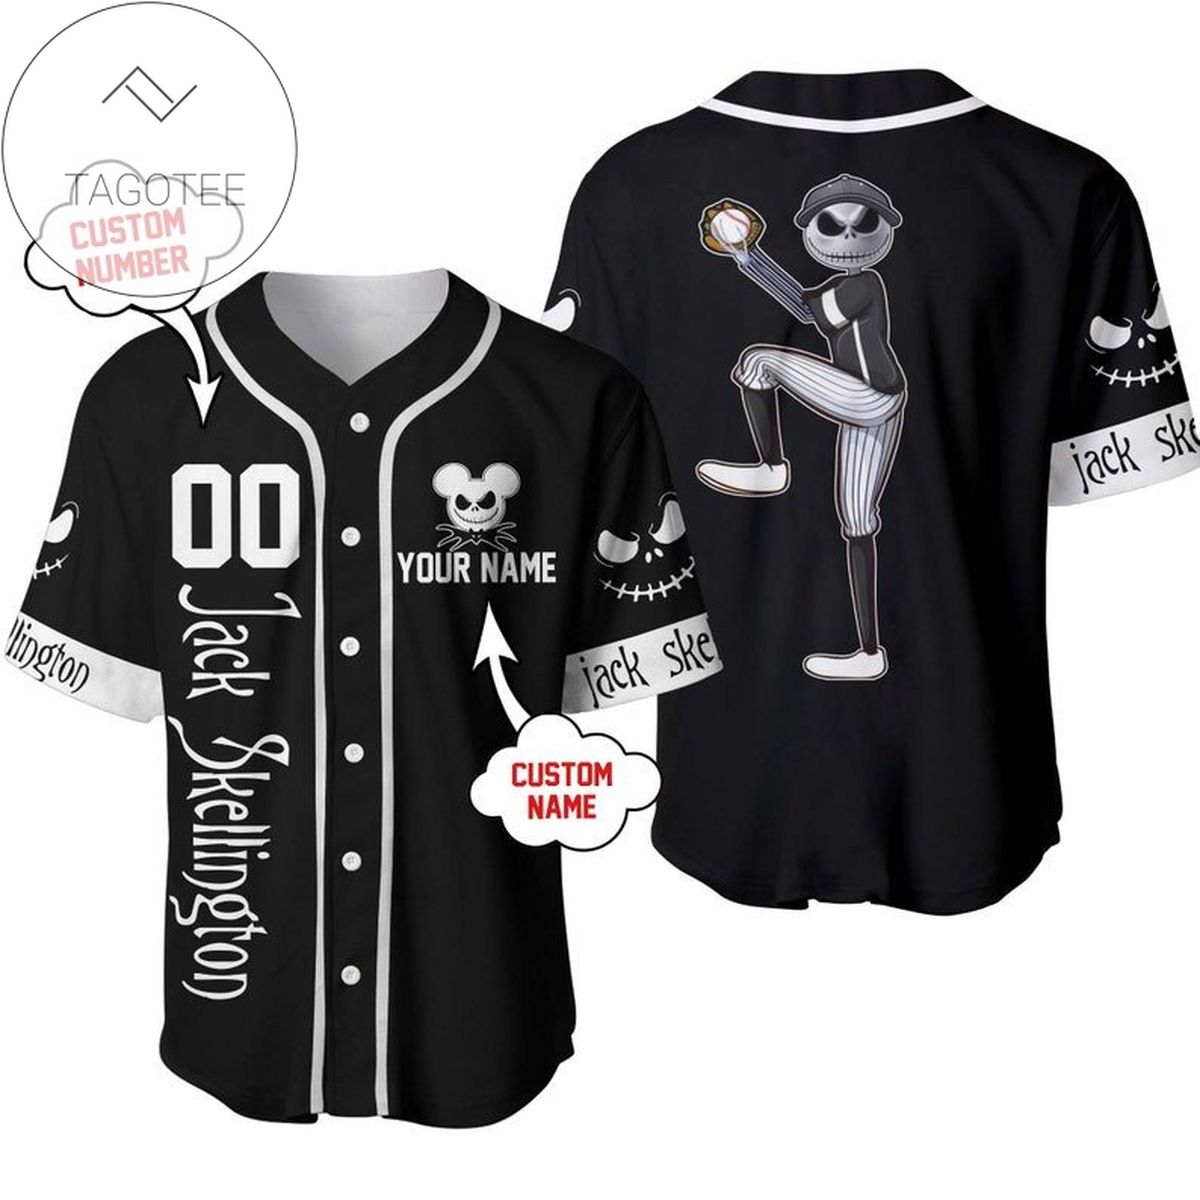 Personalized Jack Skellington Disney All Over Print Baseball Jersey - Black